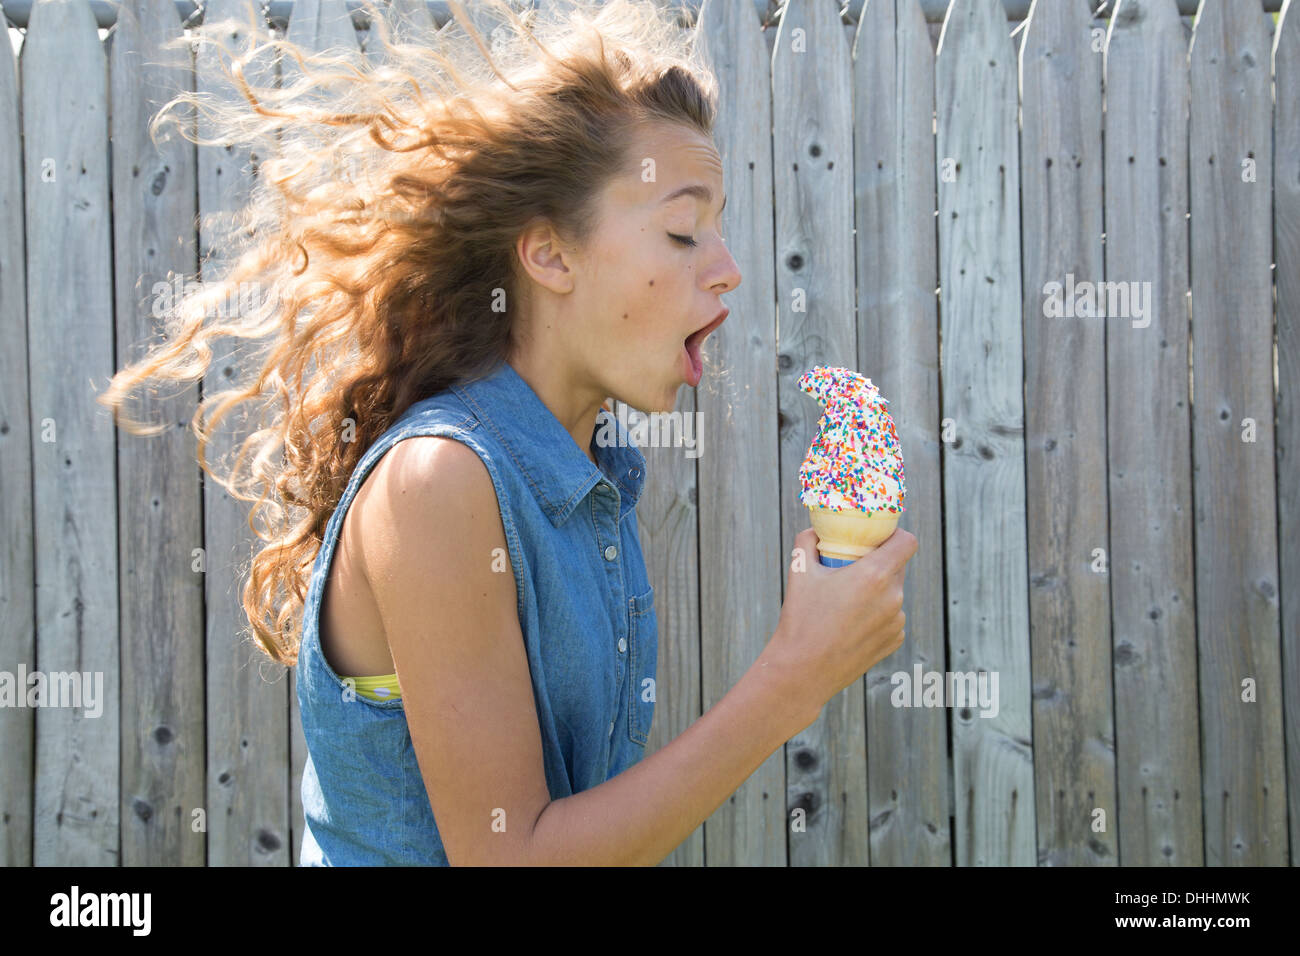 Teenage girl holding ice cream cone Stock Photo